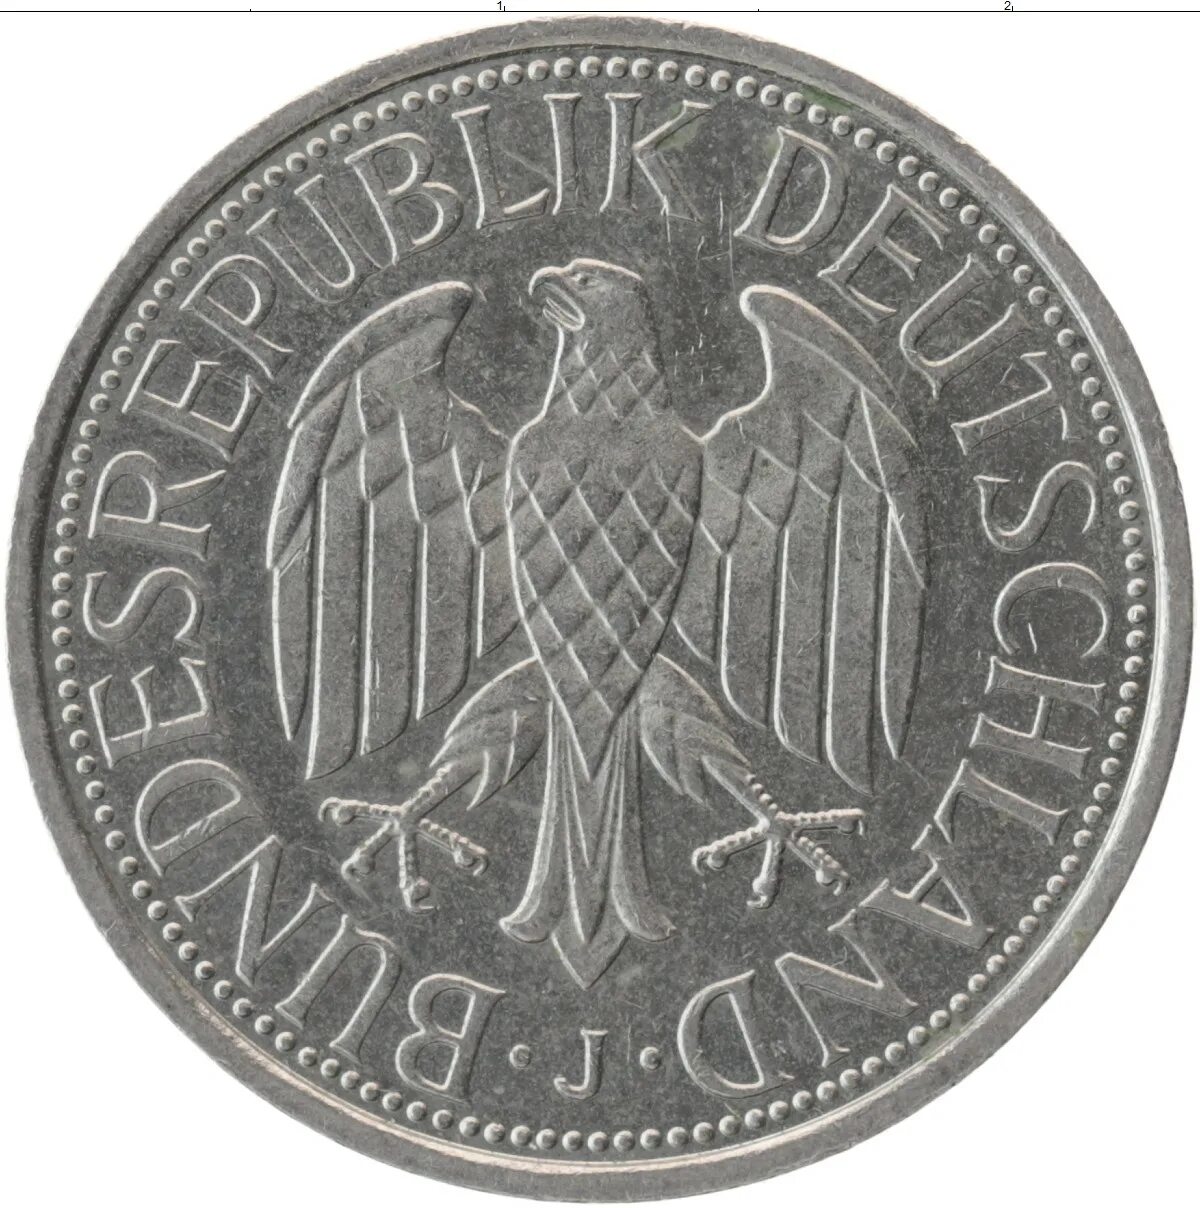 1 Дойч марка. Монета 1 Deutsche Mark 1950. Монеты Дойч марки. Deutsche Mark 1990 редкие монеты.